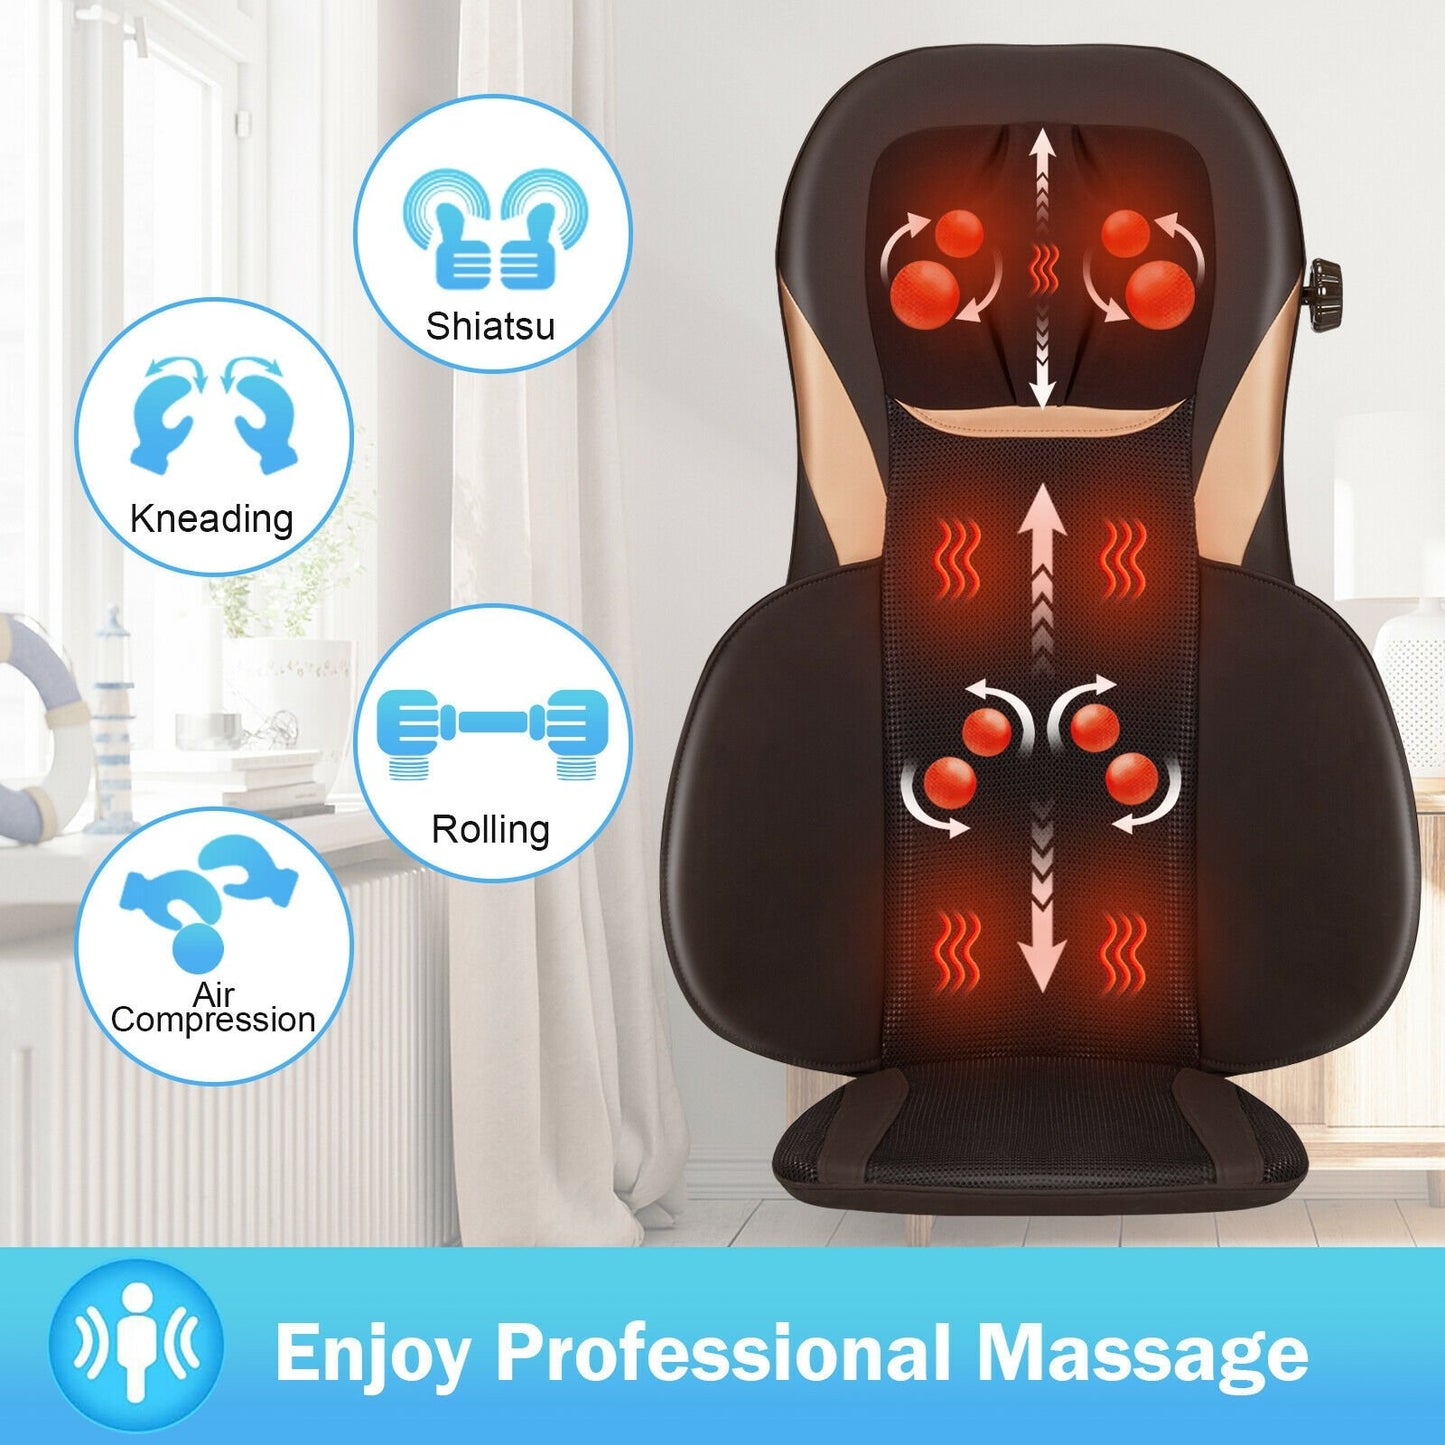 Shiatsu Massage with Heat Massage Chair, Golden at Gallery Canada